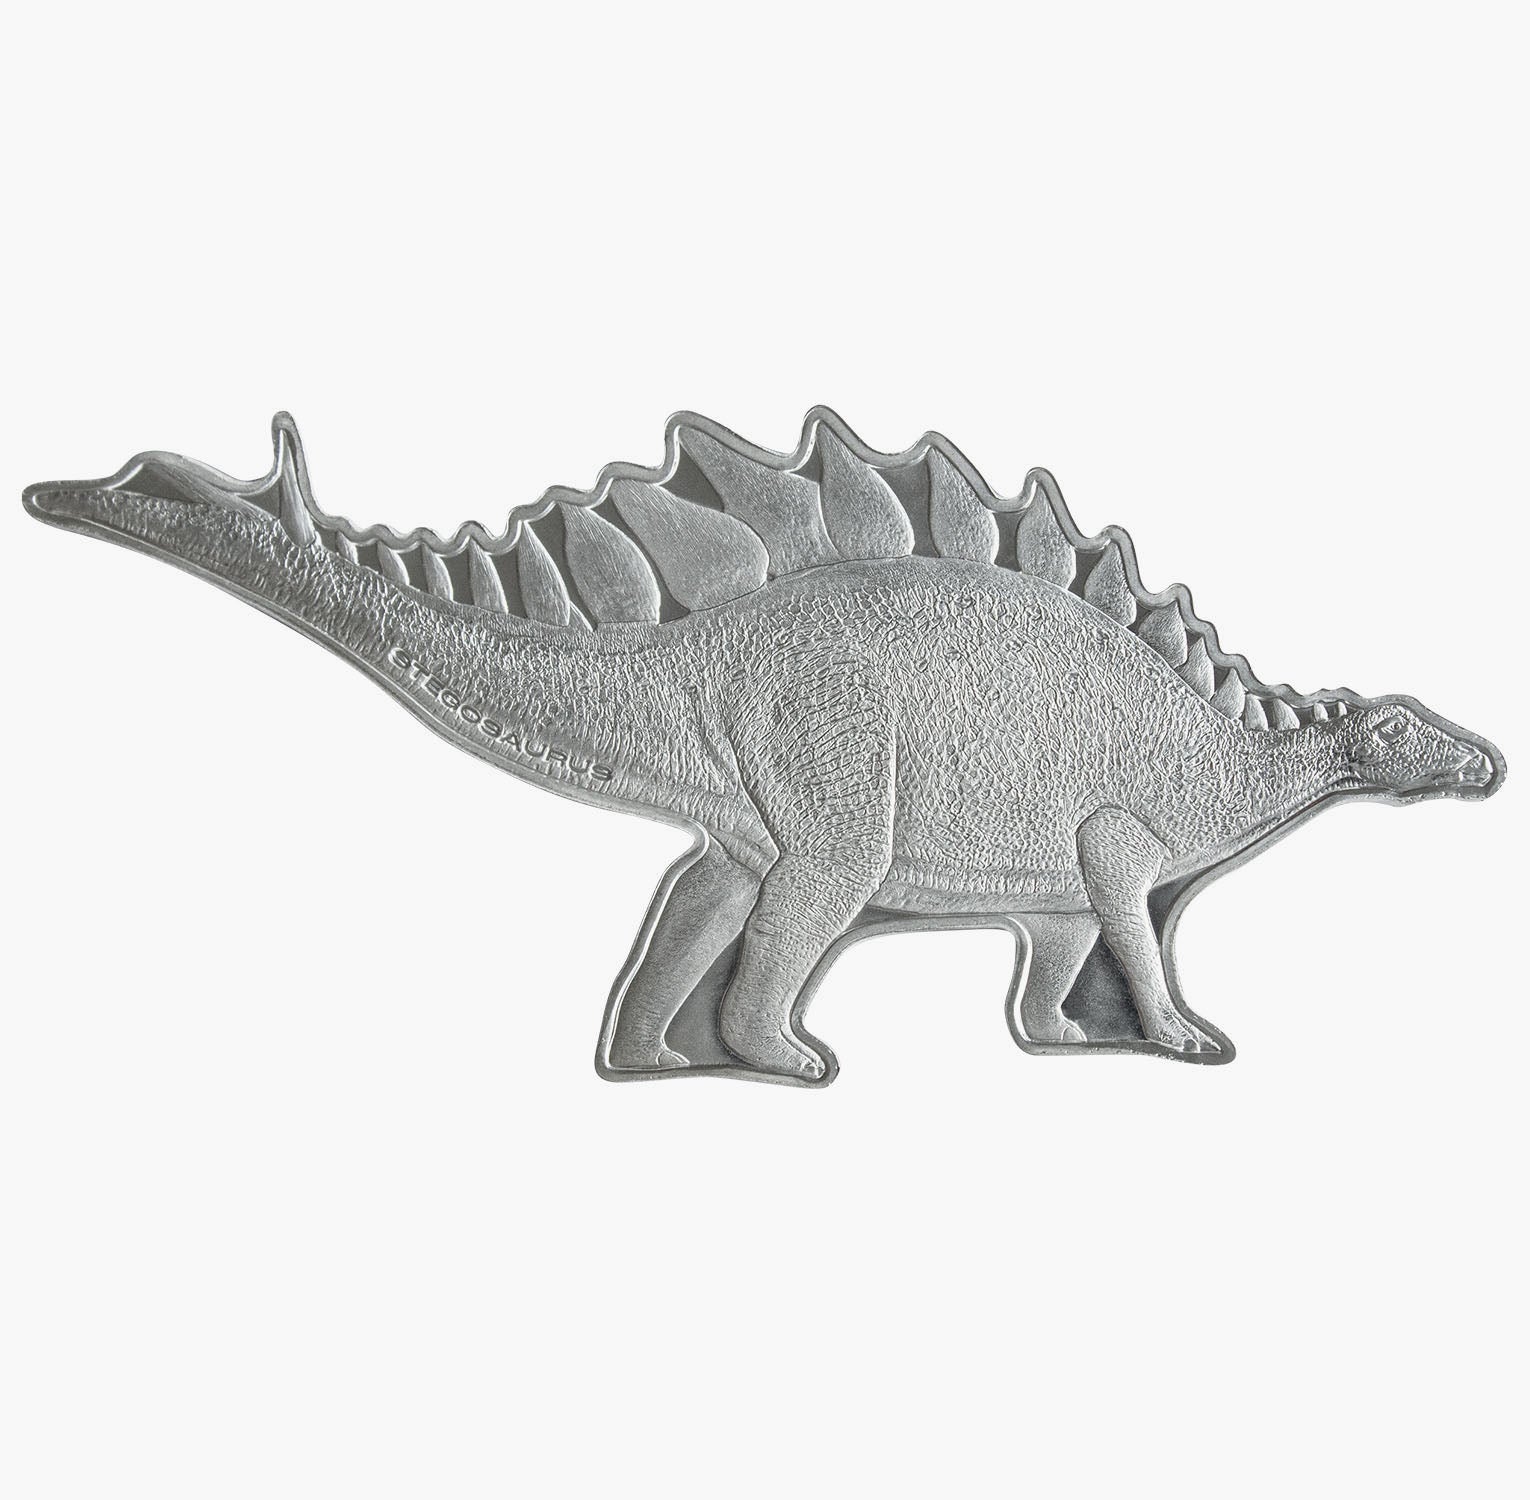 Stegosaurus 3D 2oz Solid Silver Shaped Coin